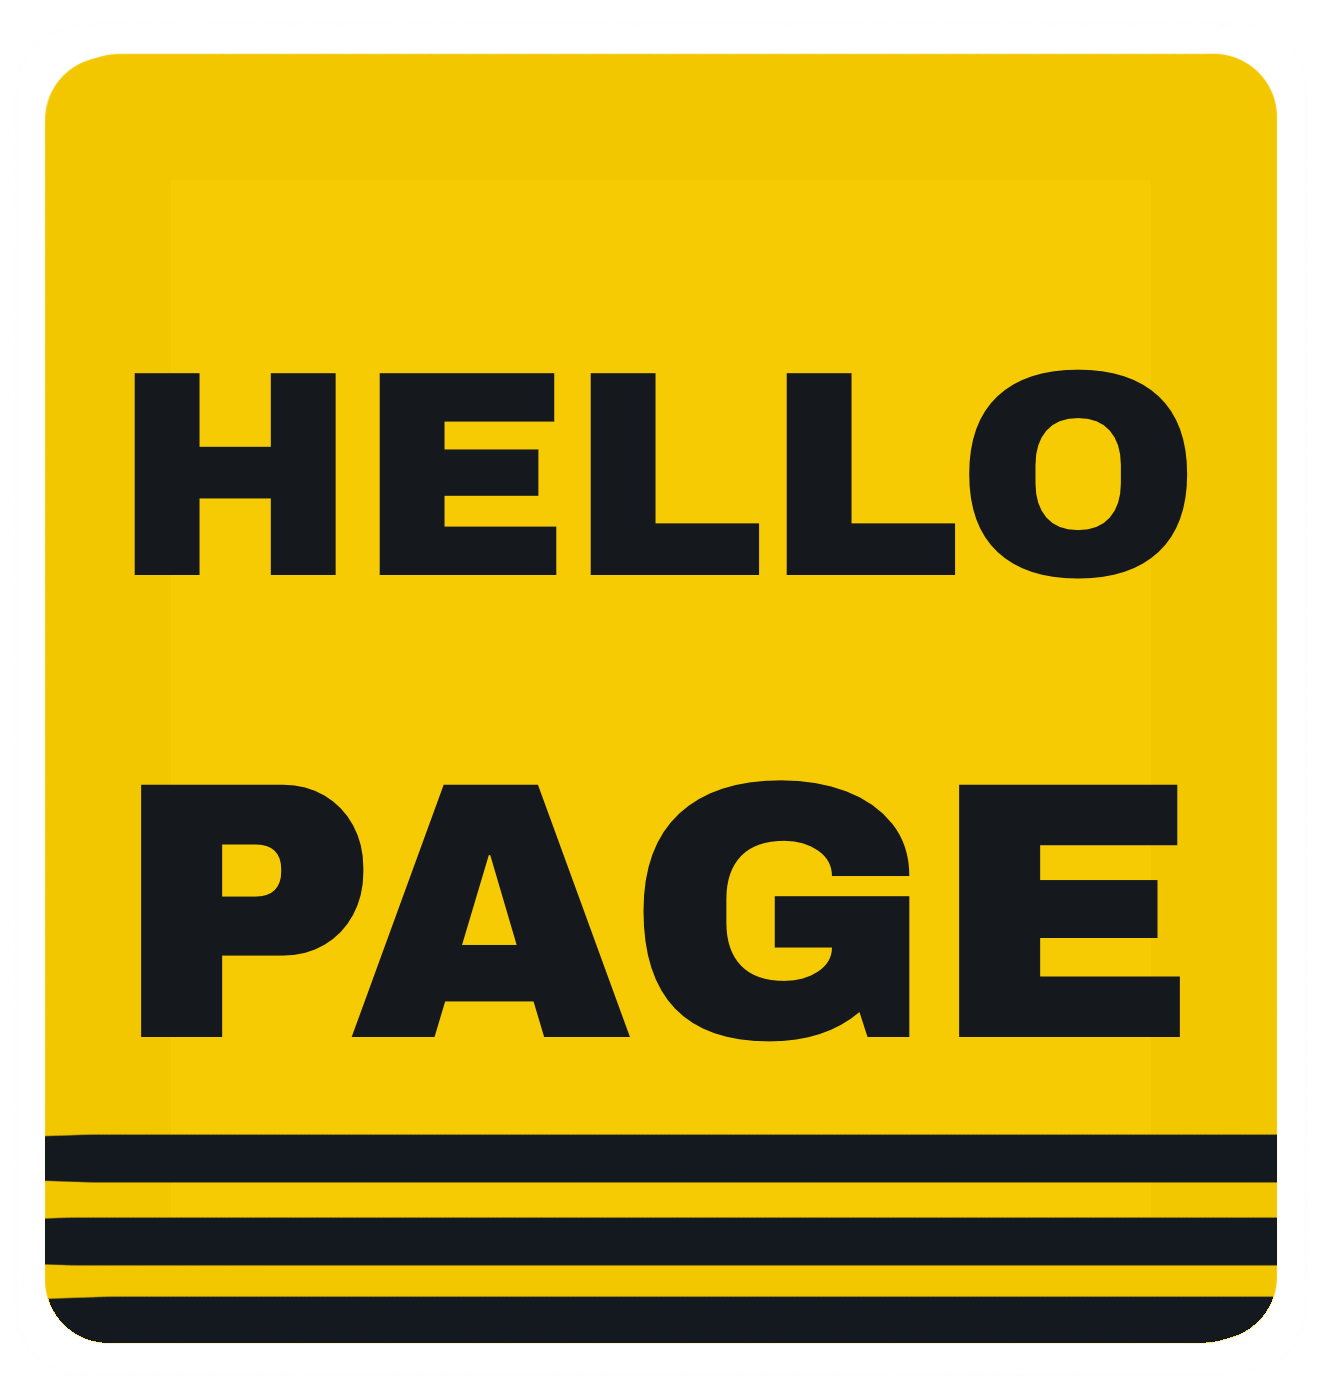 Hello Page